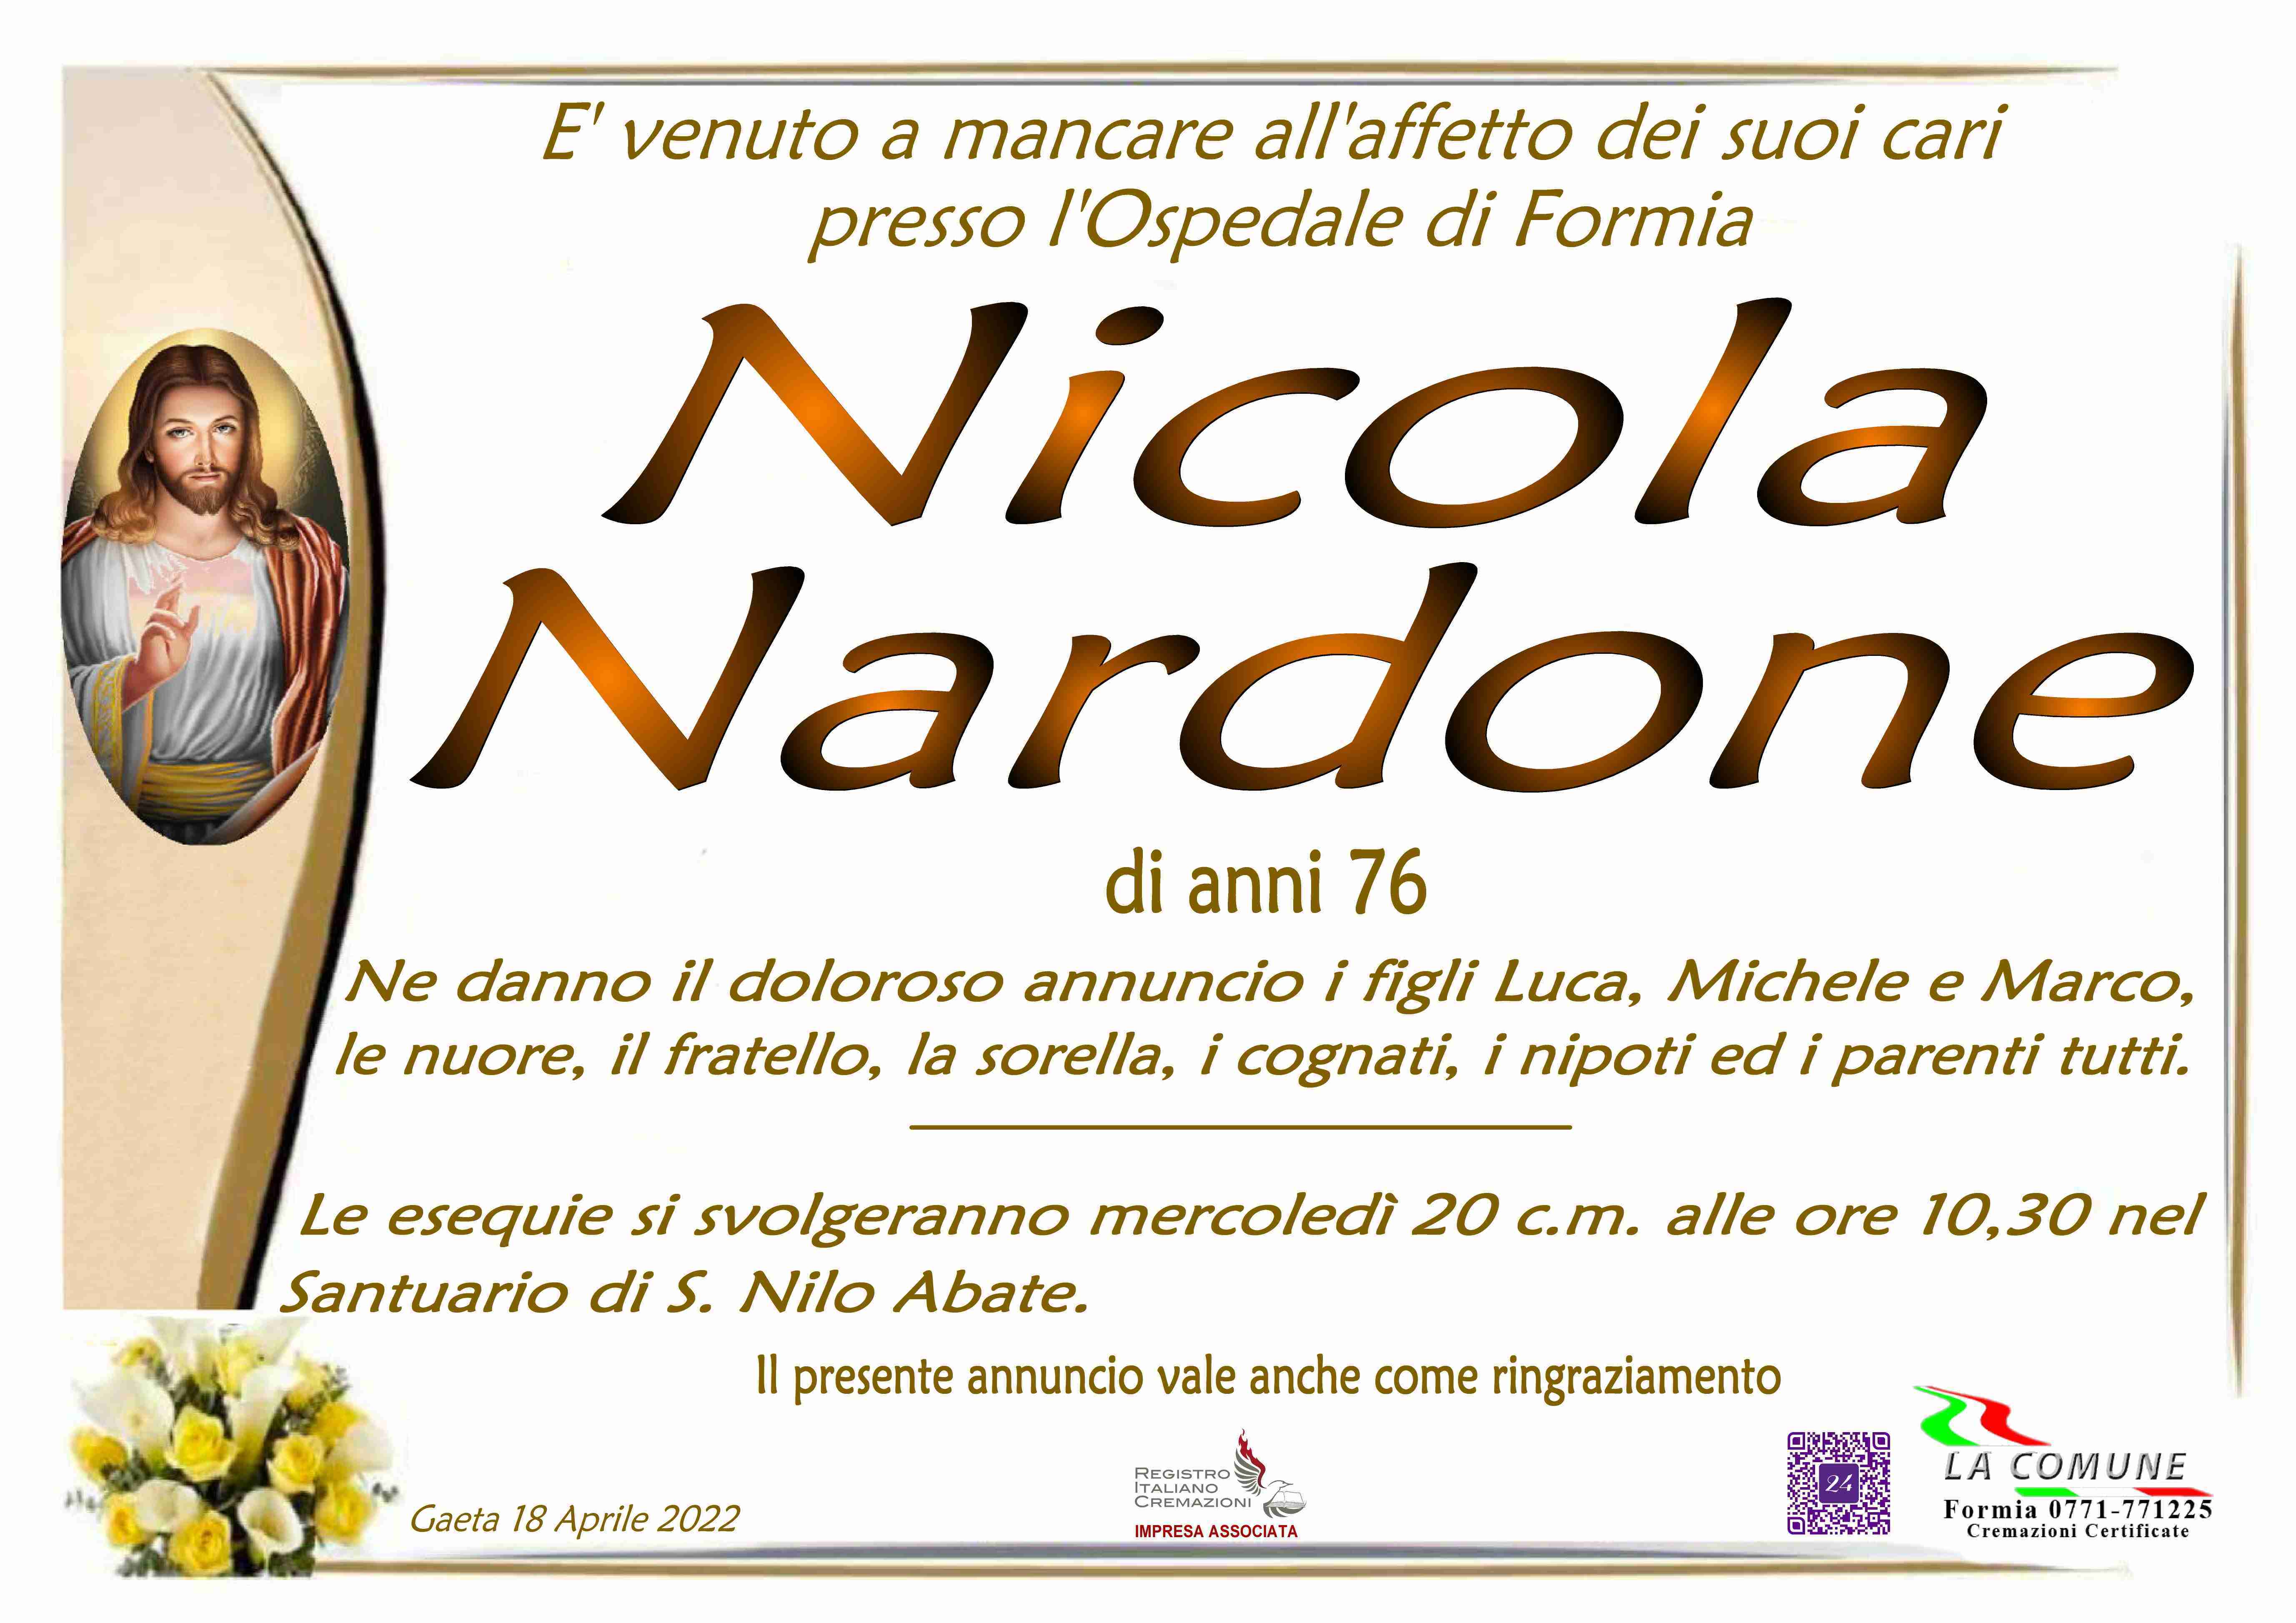 Nicola Nardone